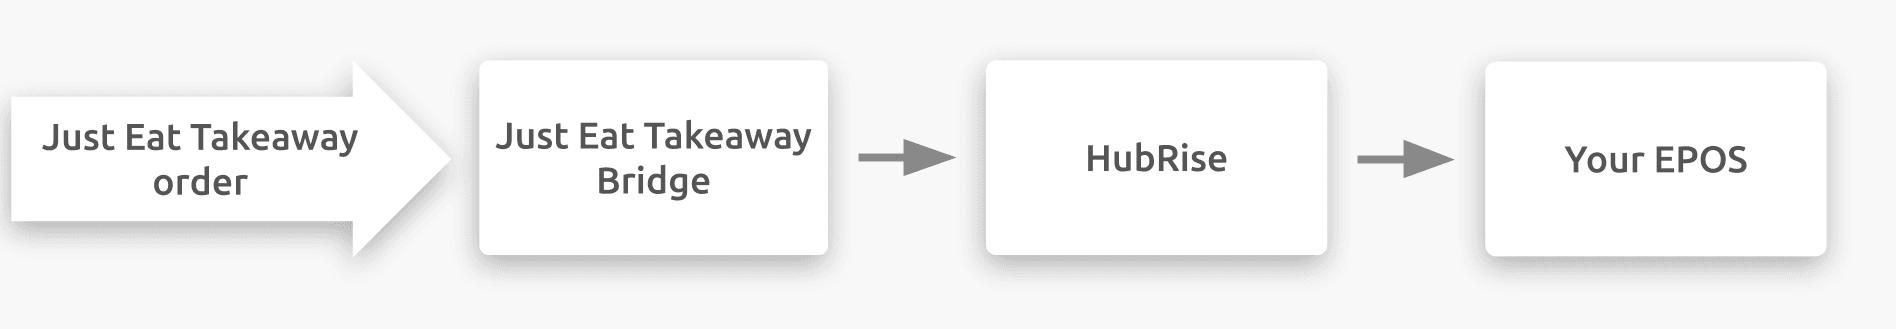 Diagram of the connection flow between Just Eat Takeaway, Just Eat Takeaway Bridge, and HubRise